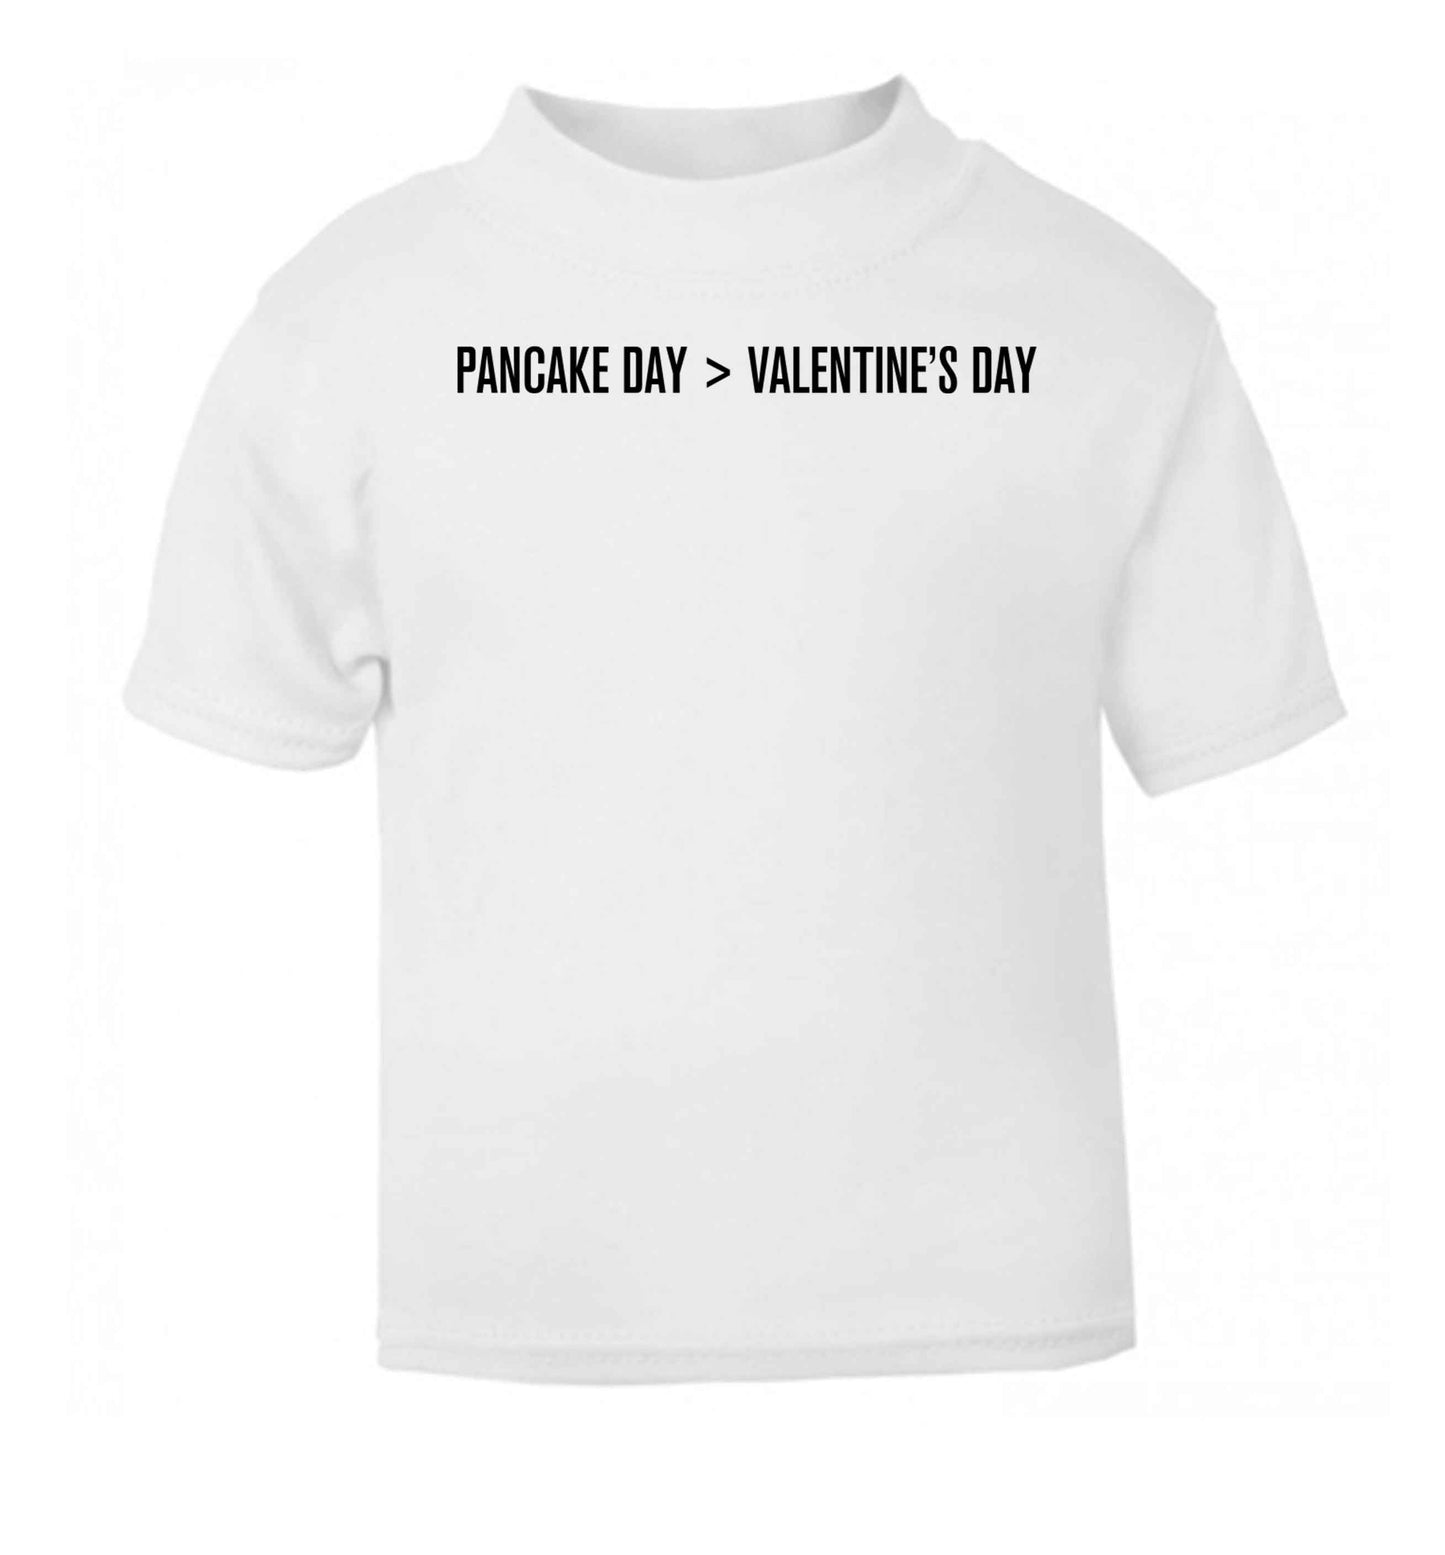 Pancake day > valentines day white baby toddler Tshirt 2 Years